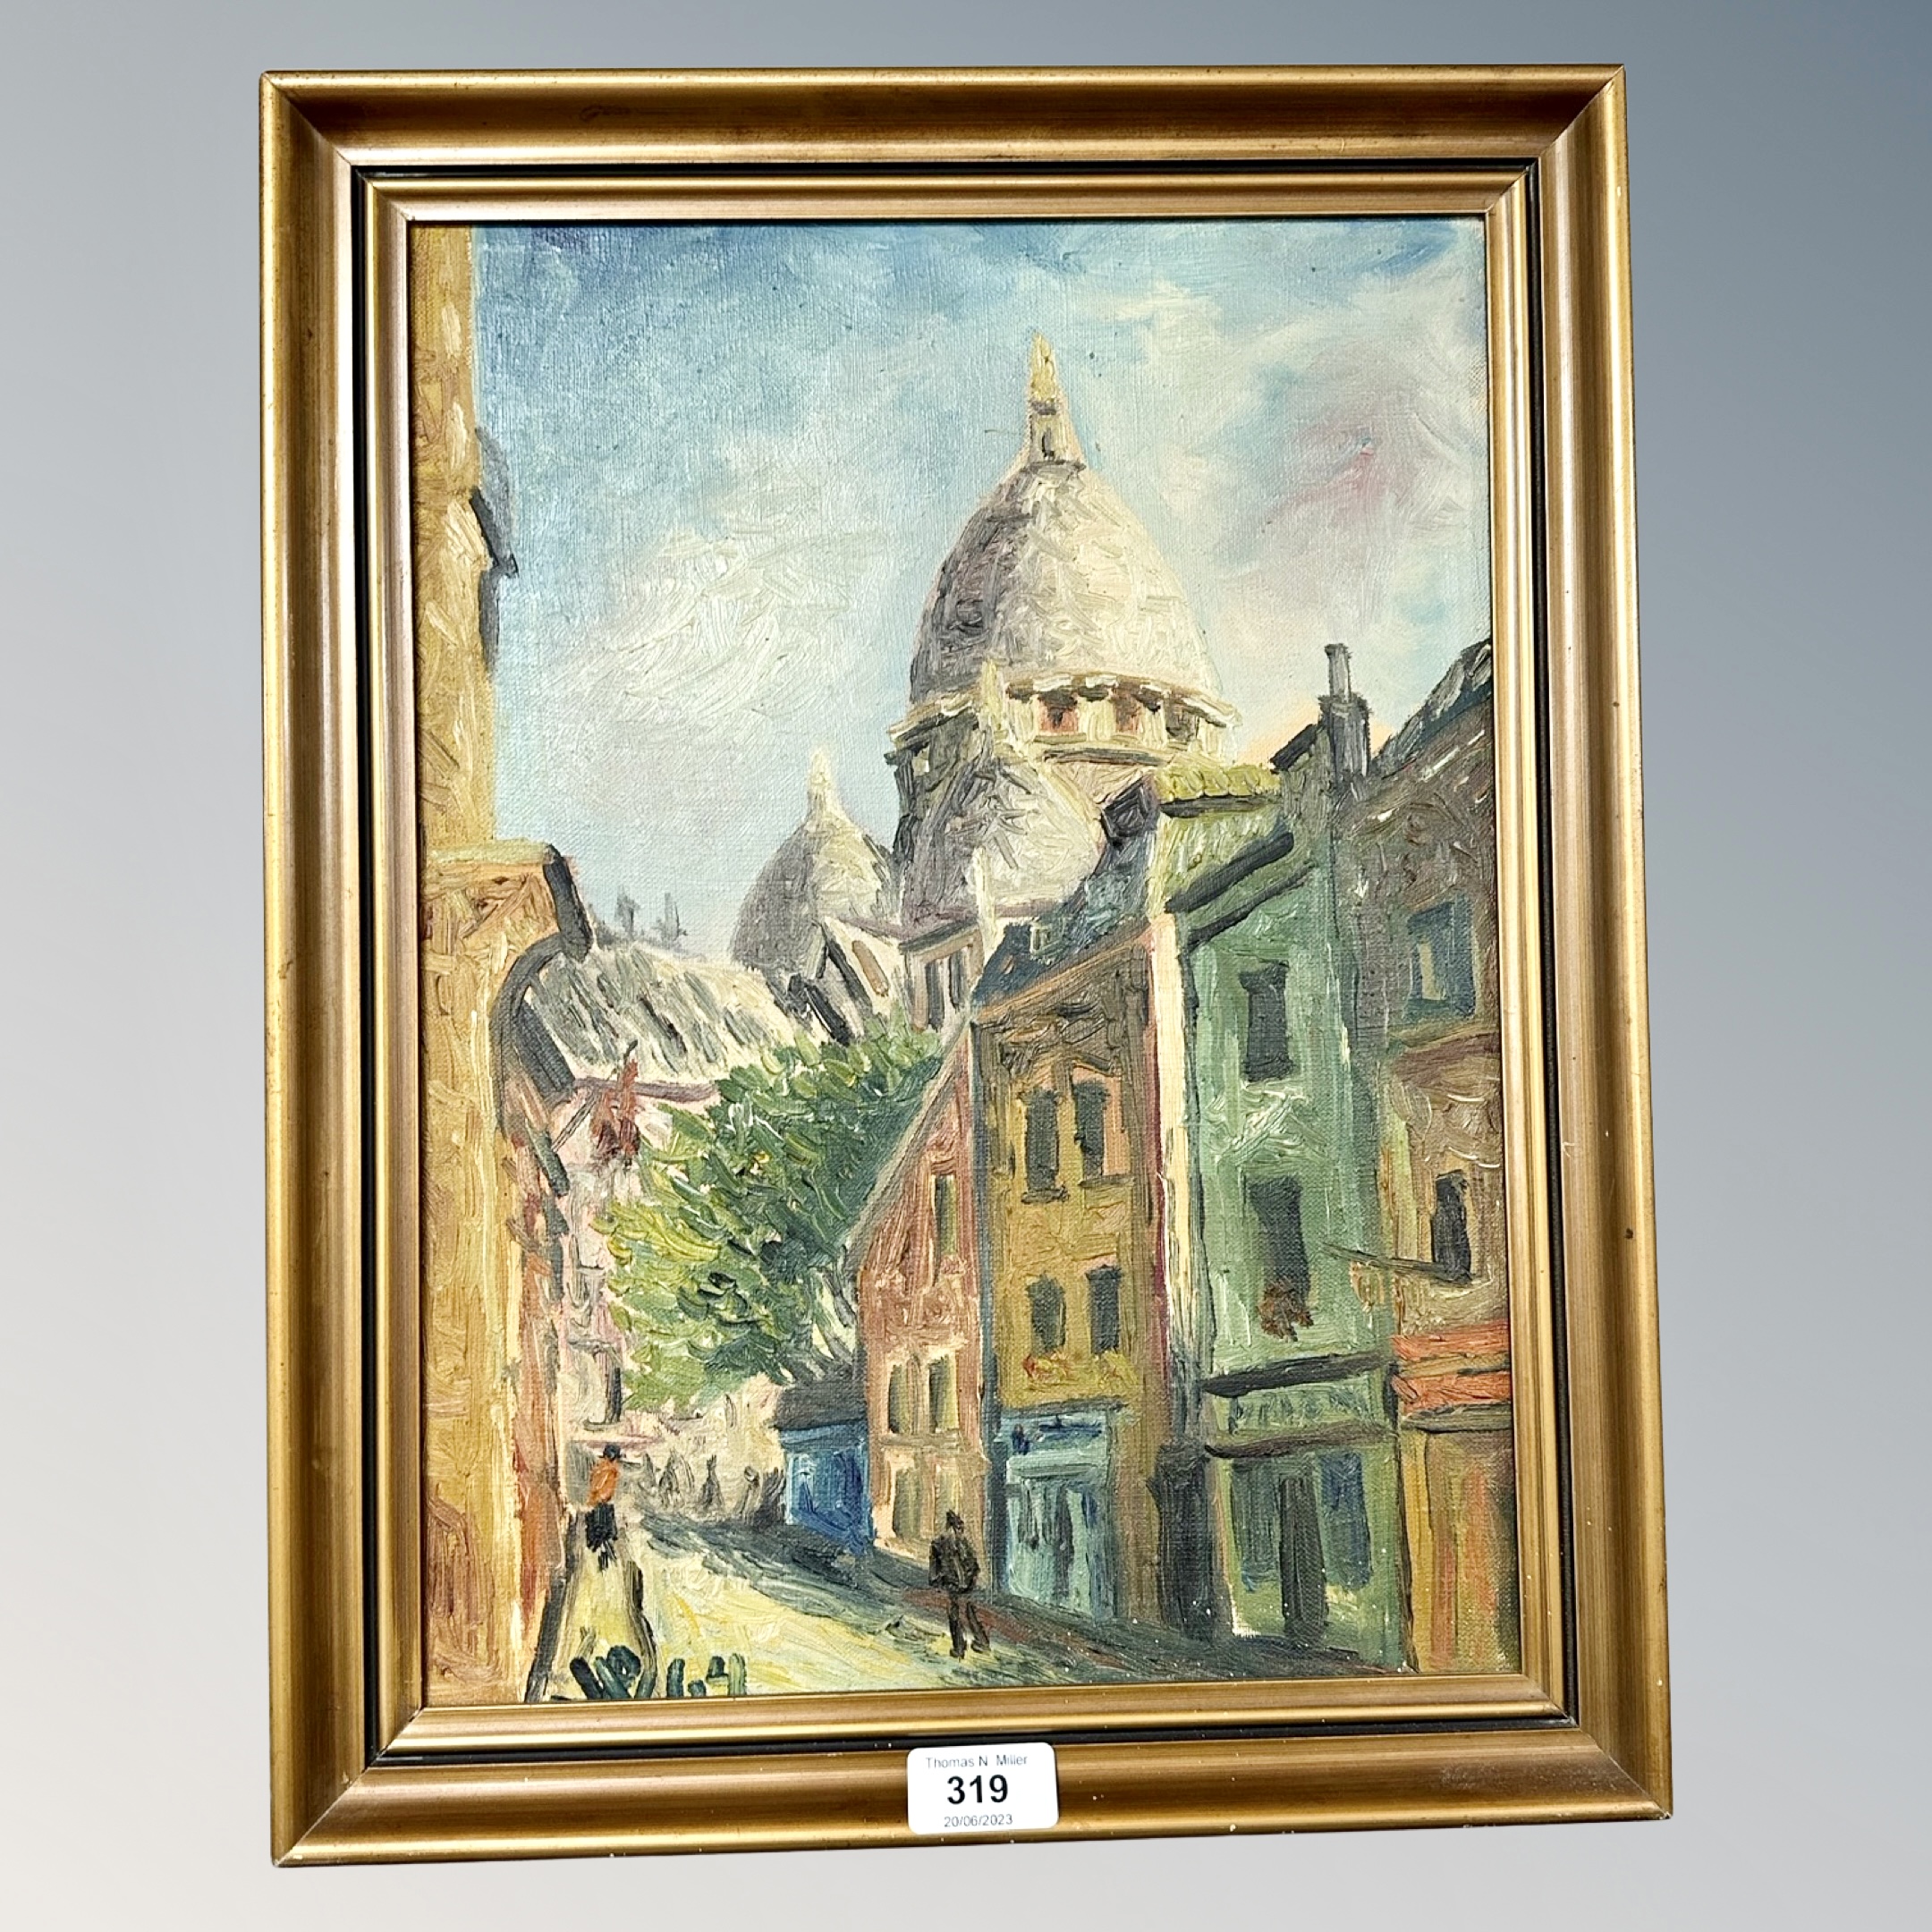 Continental School : Street scene, oil on canvas, 39 cm x 29 cm, framed.